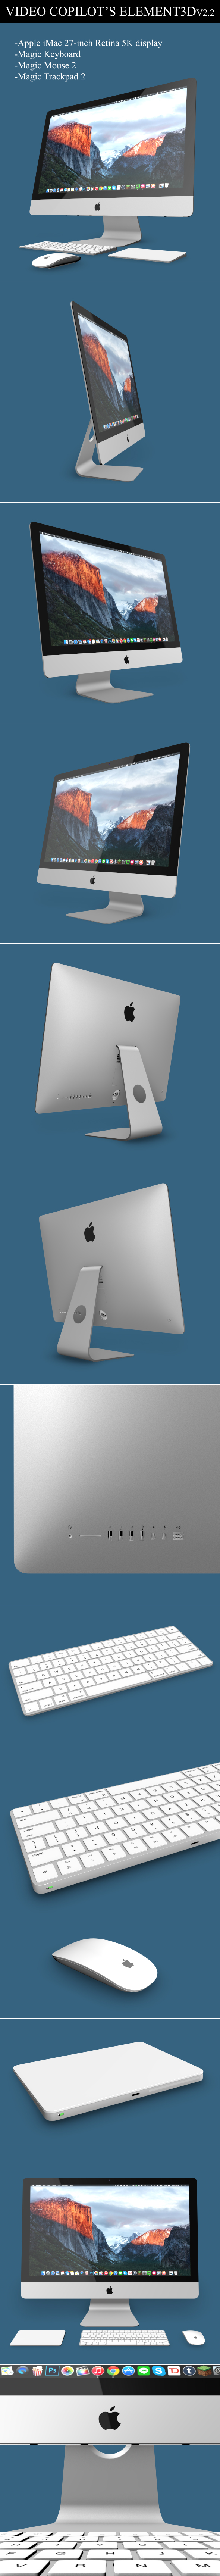 Element3D - iMac 2015 (Retina 5K 27-inch)